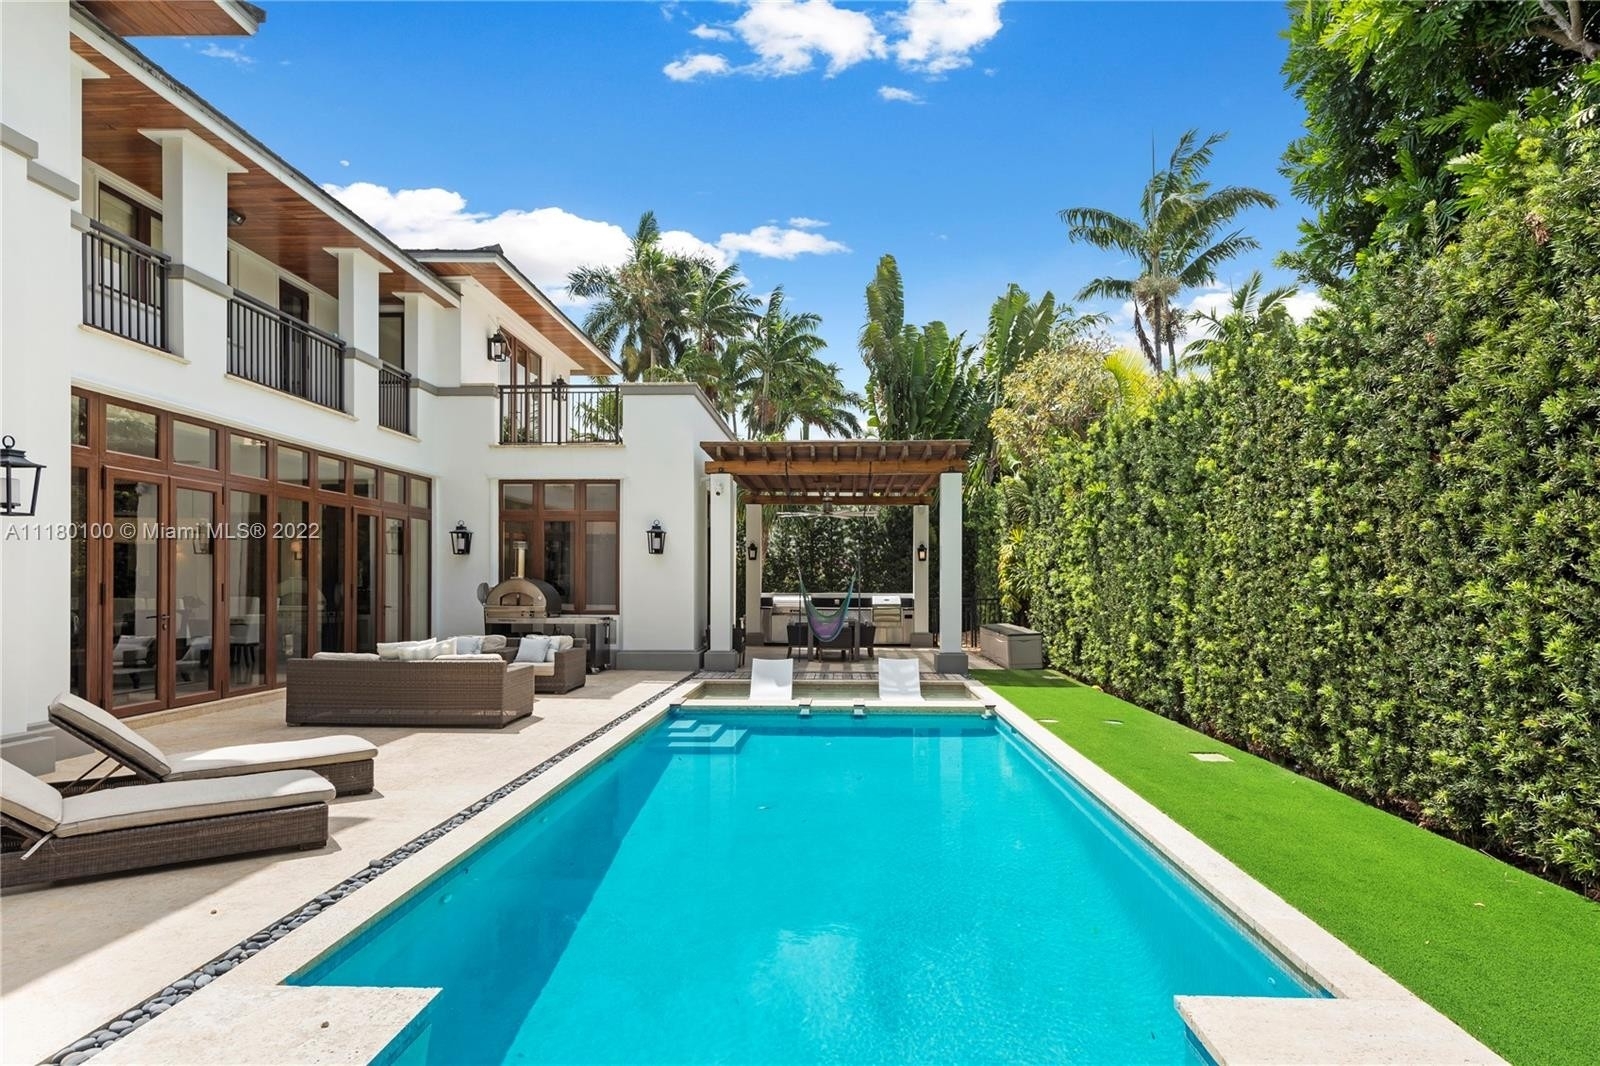 Single Family Home for Sale at South Beach, Miami Beach, Florida 33139